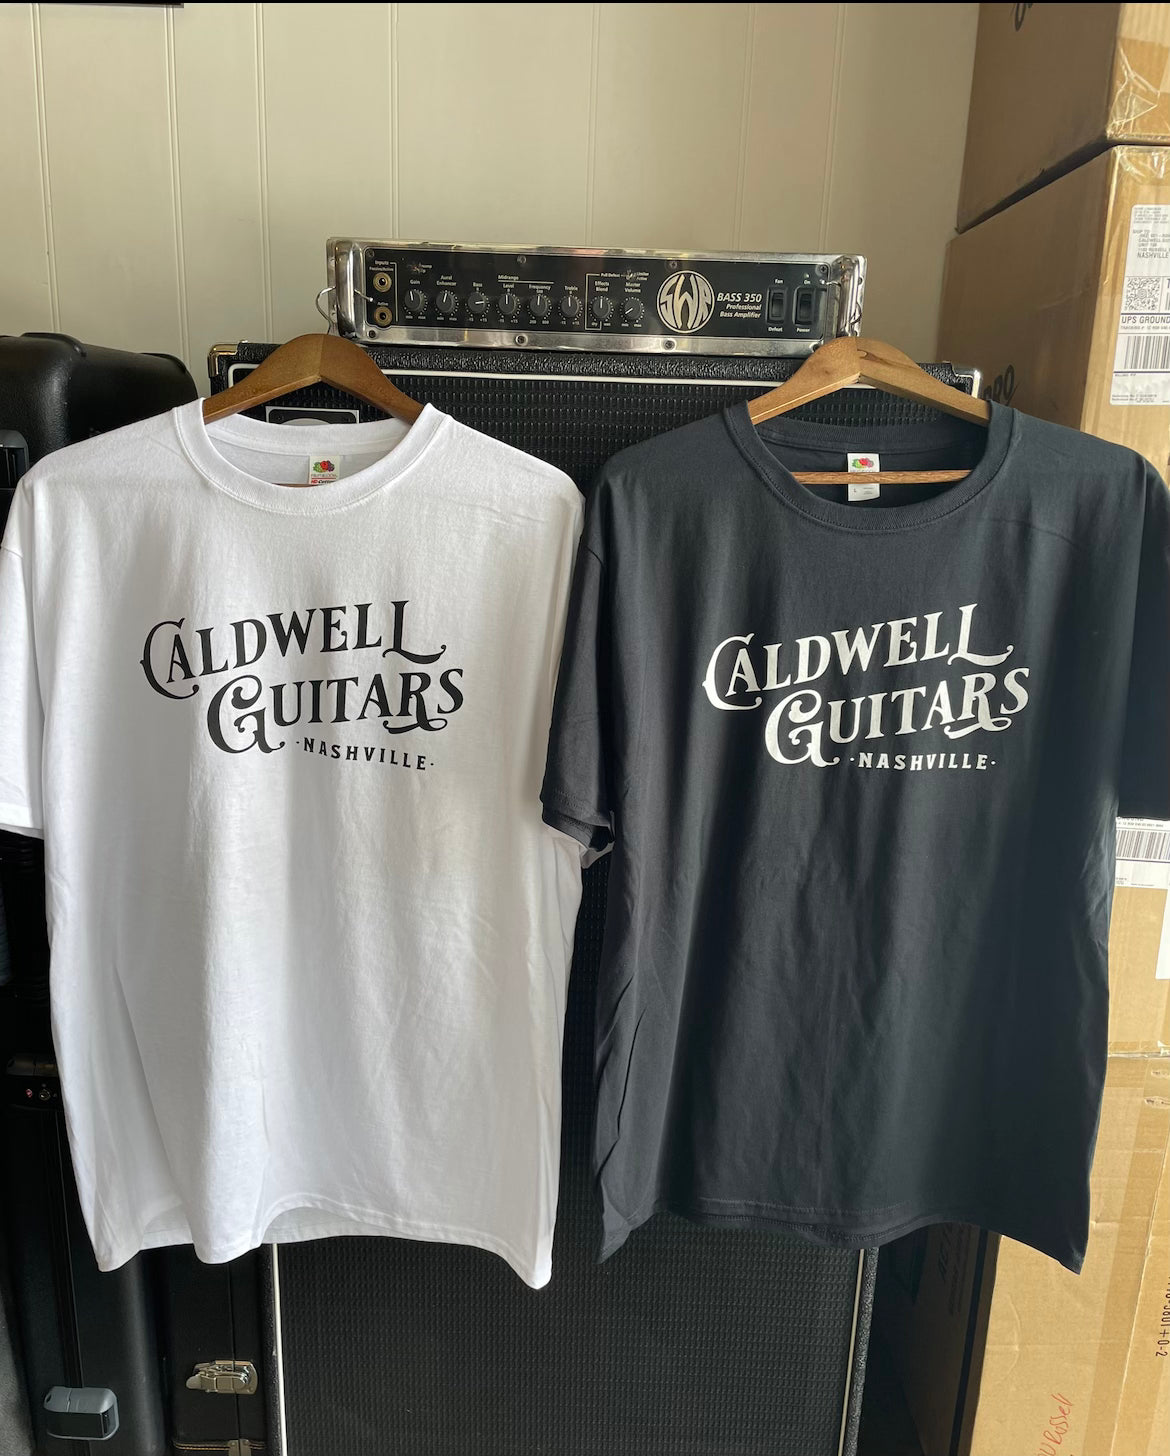 Caldwell Guitars Nashville T-Shirt